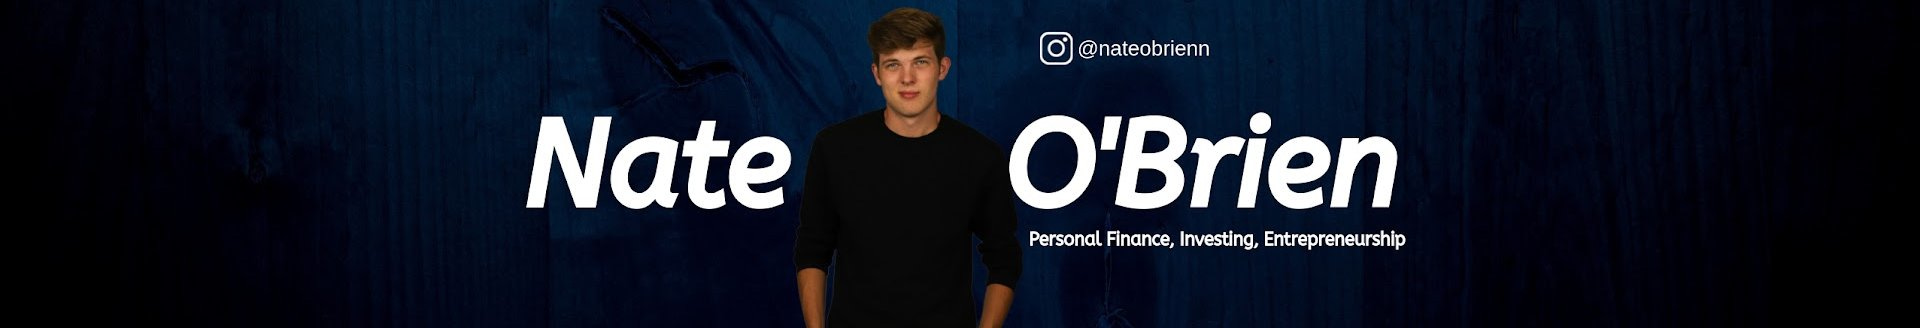 Nate O'Brien channel banner